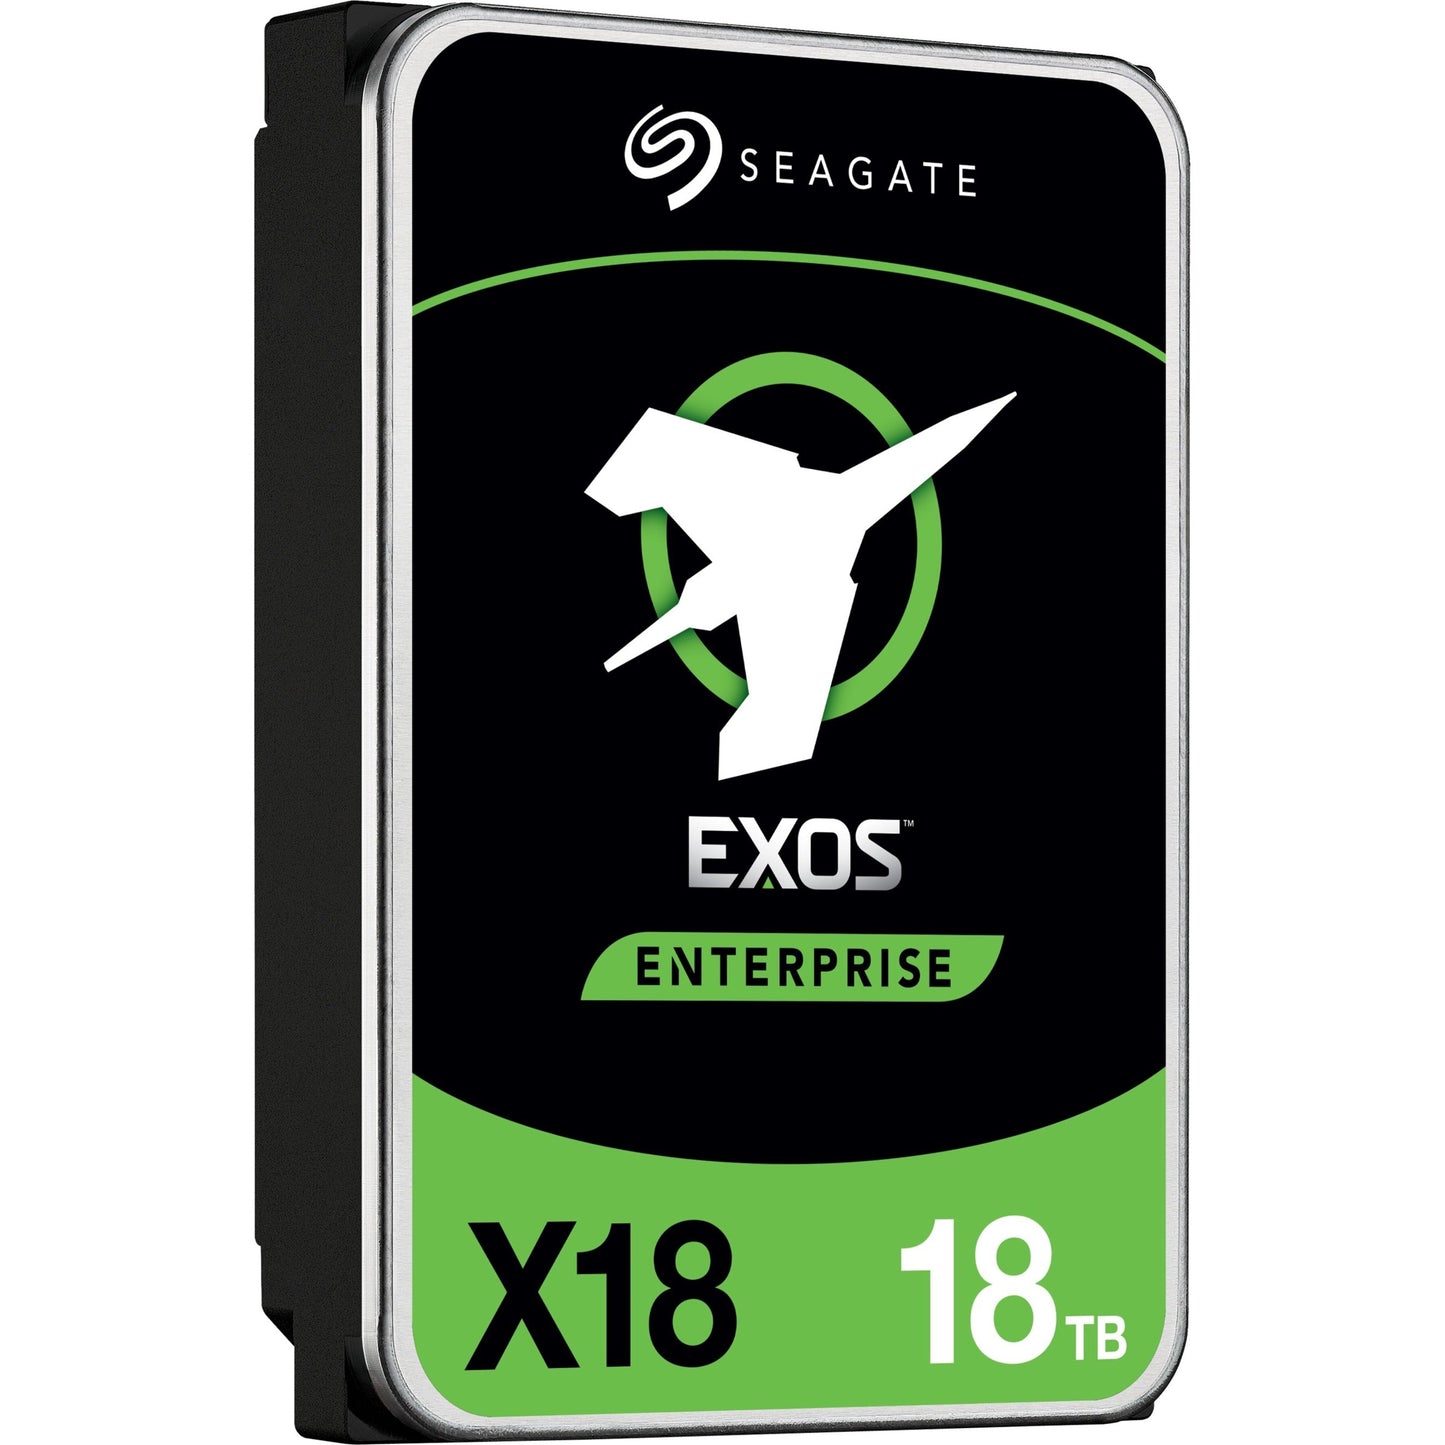 Seagate Exos X18 ST18000NM000J 18 TB Hard Drive - Internal - SATA (SATA/600)